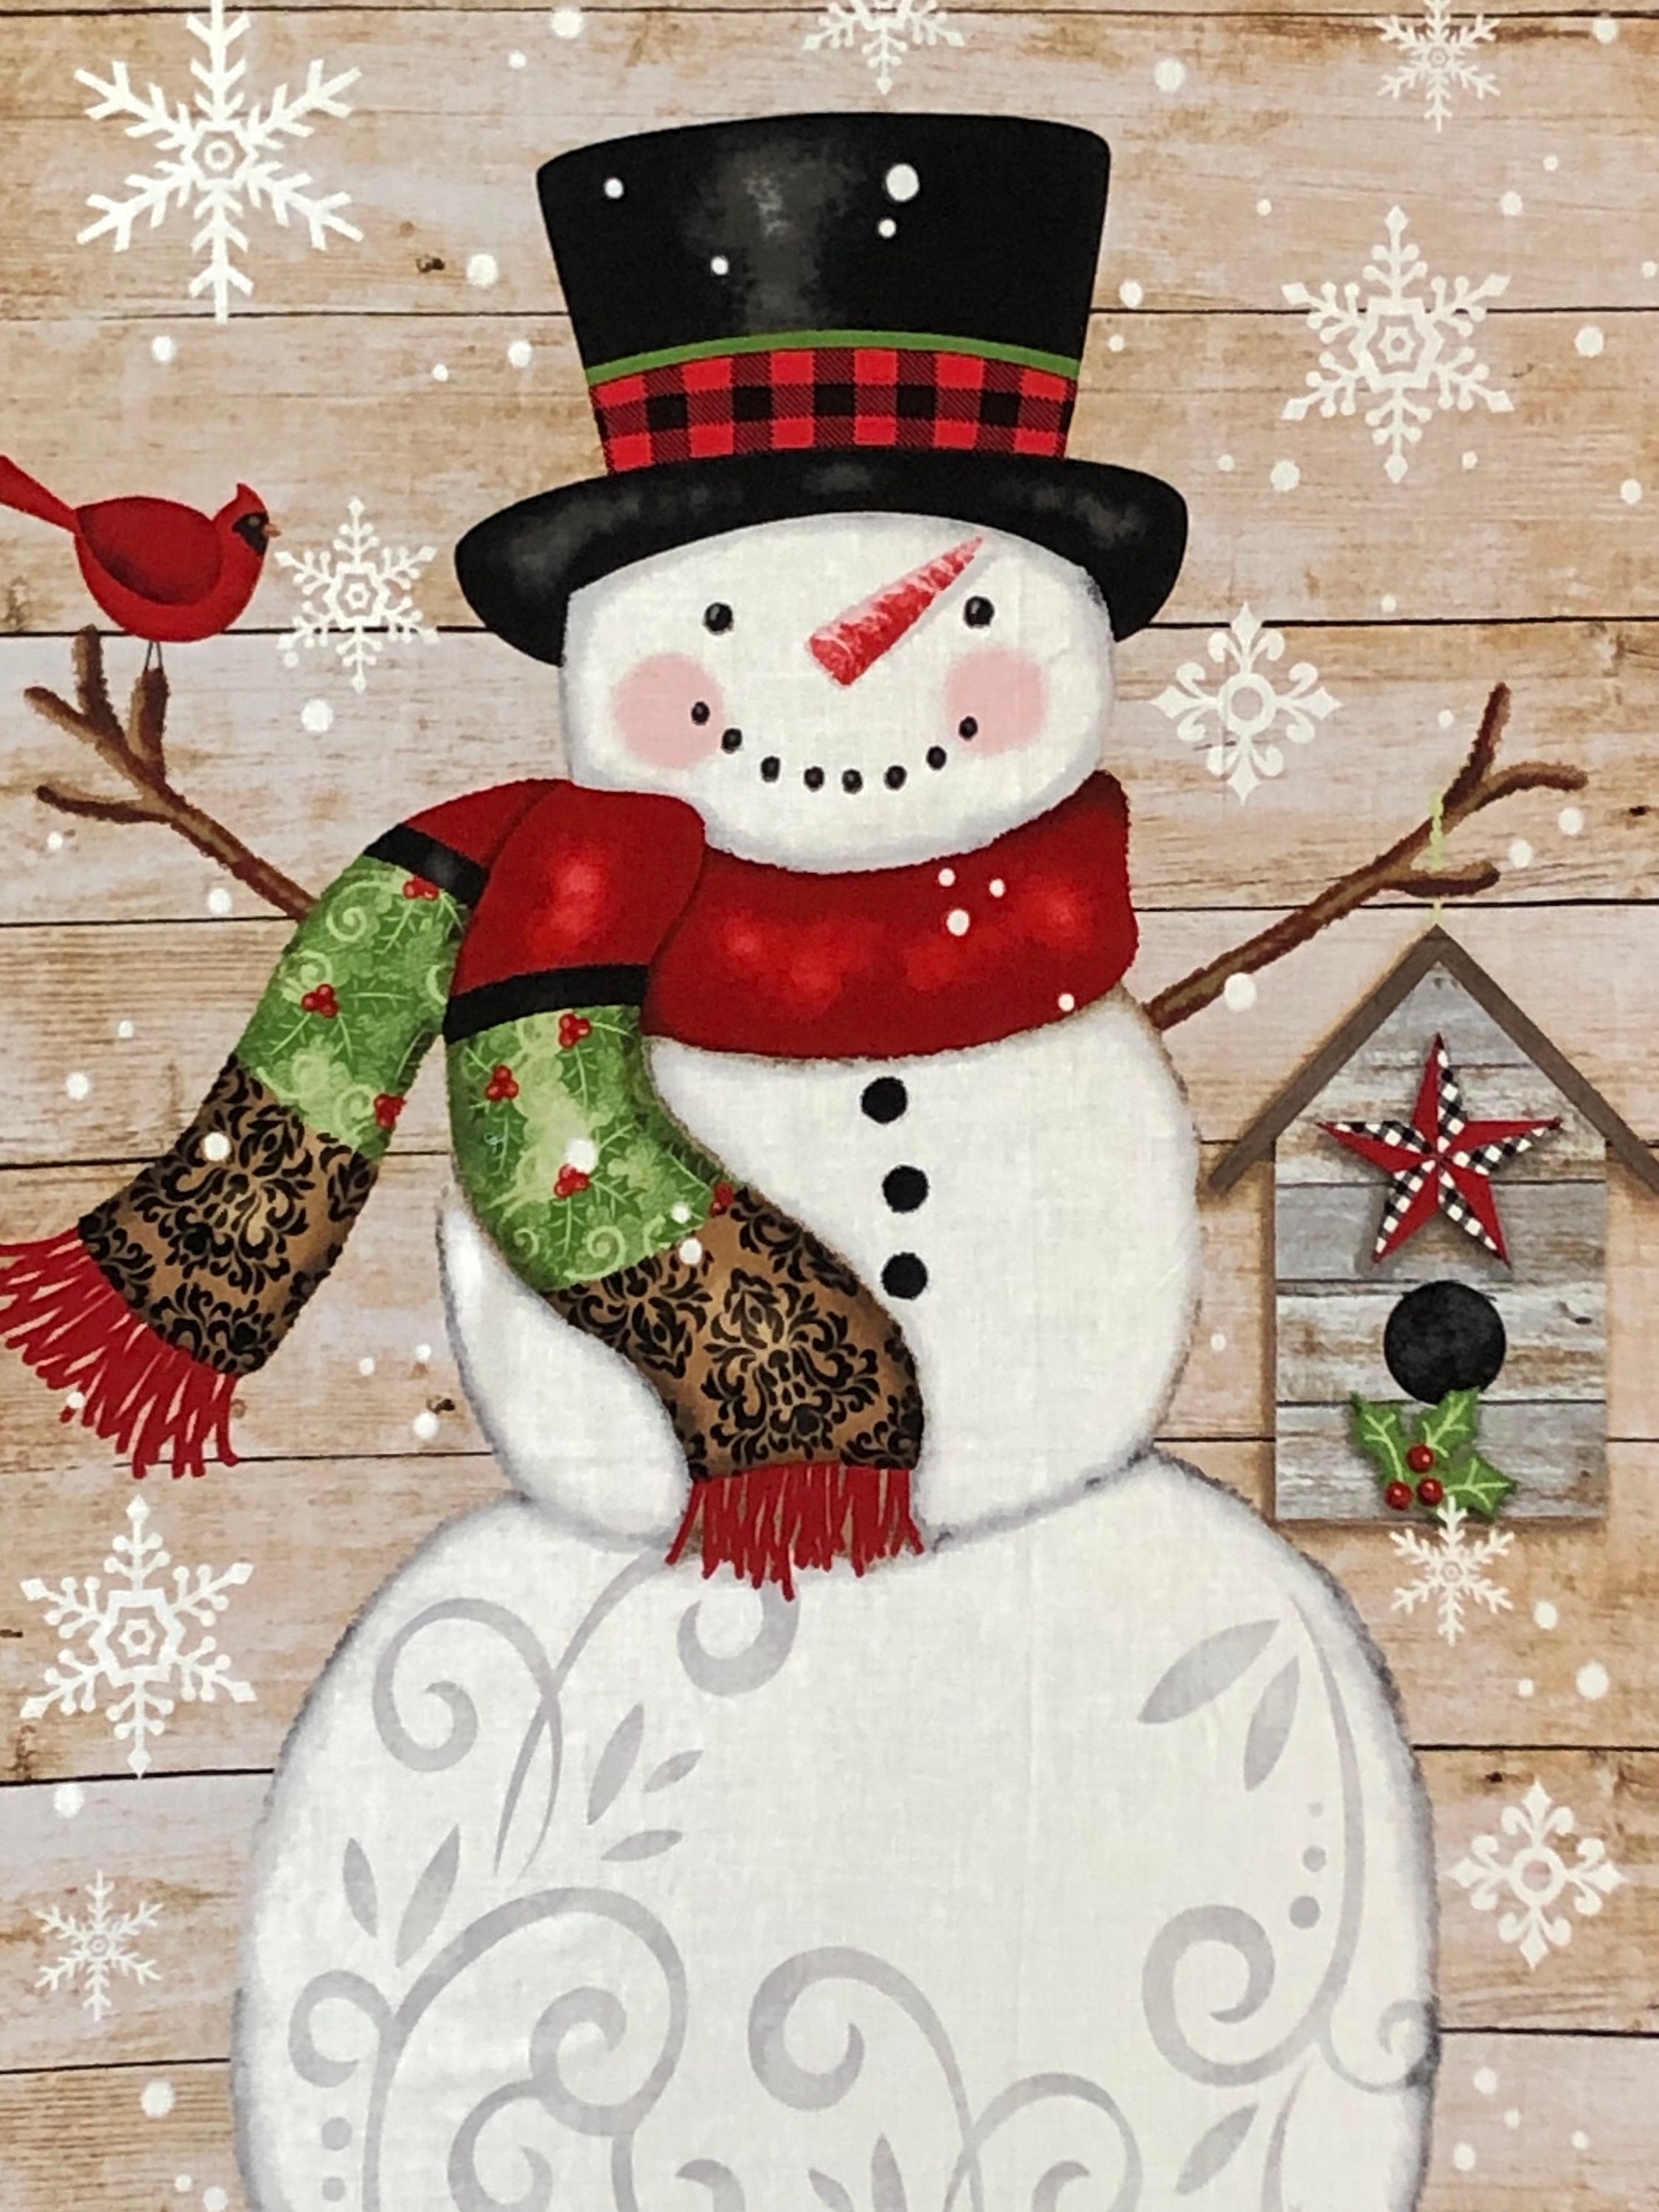 Free Shipping U.S. Snow Place Like Home Christmas Snowmen by Sharla Fultz Studio E Cotton Quilt Fabric 5162-98